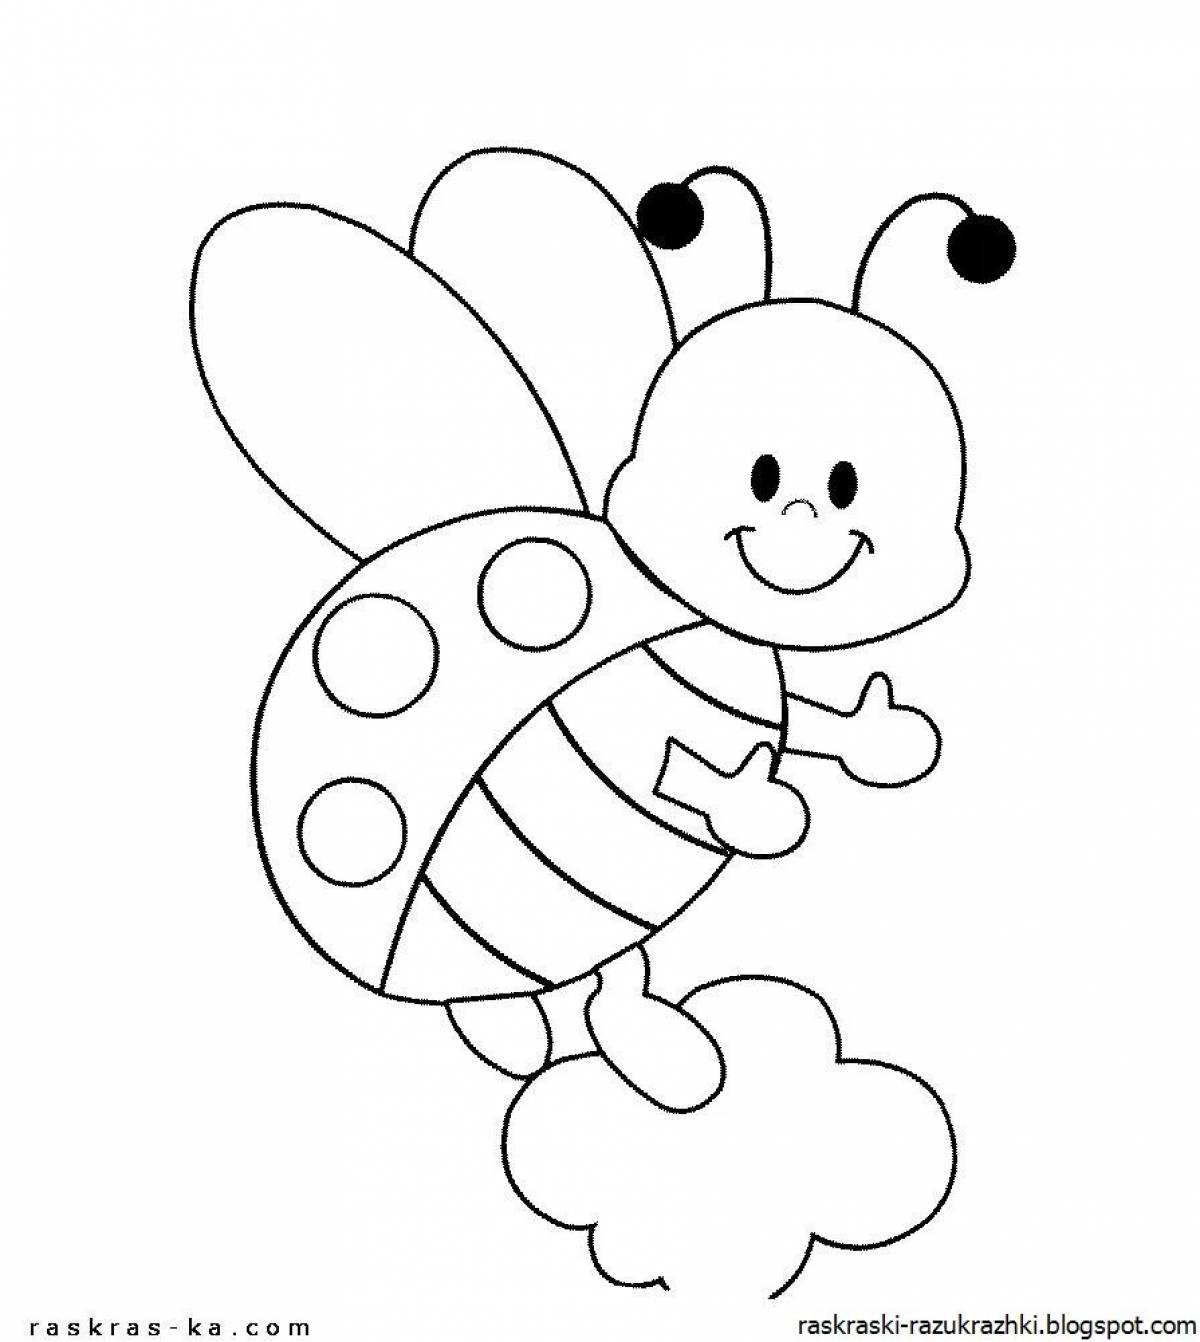 Exquisite ladybug coloring book for preschoolers